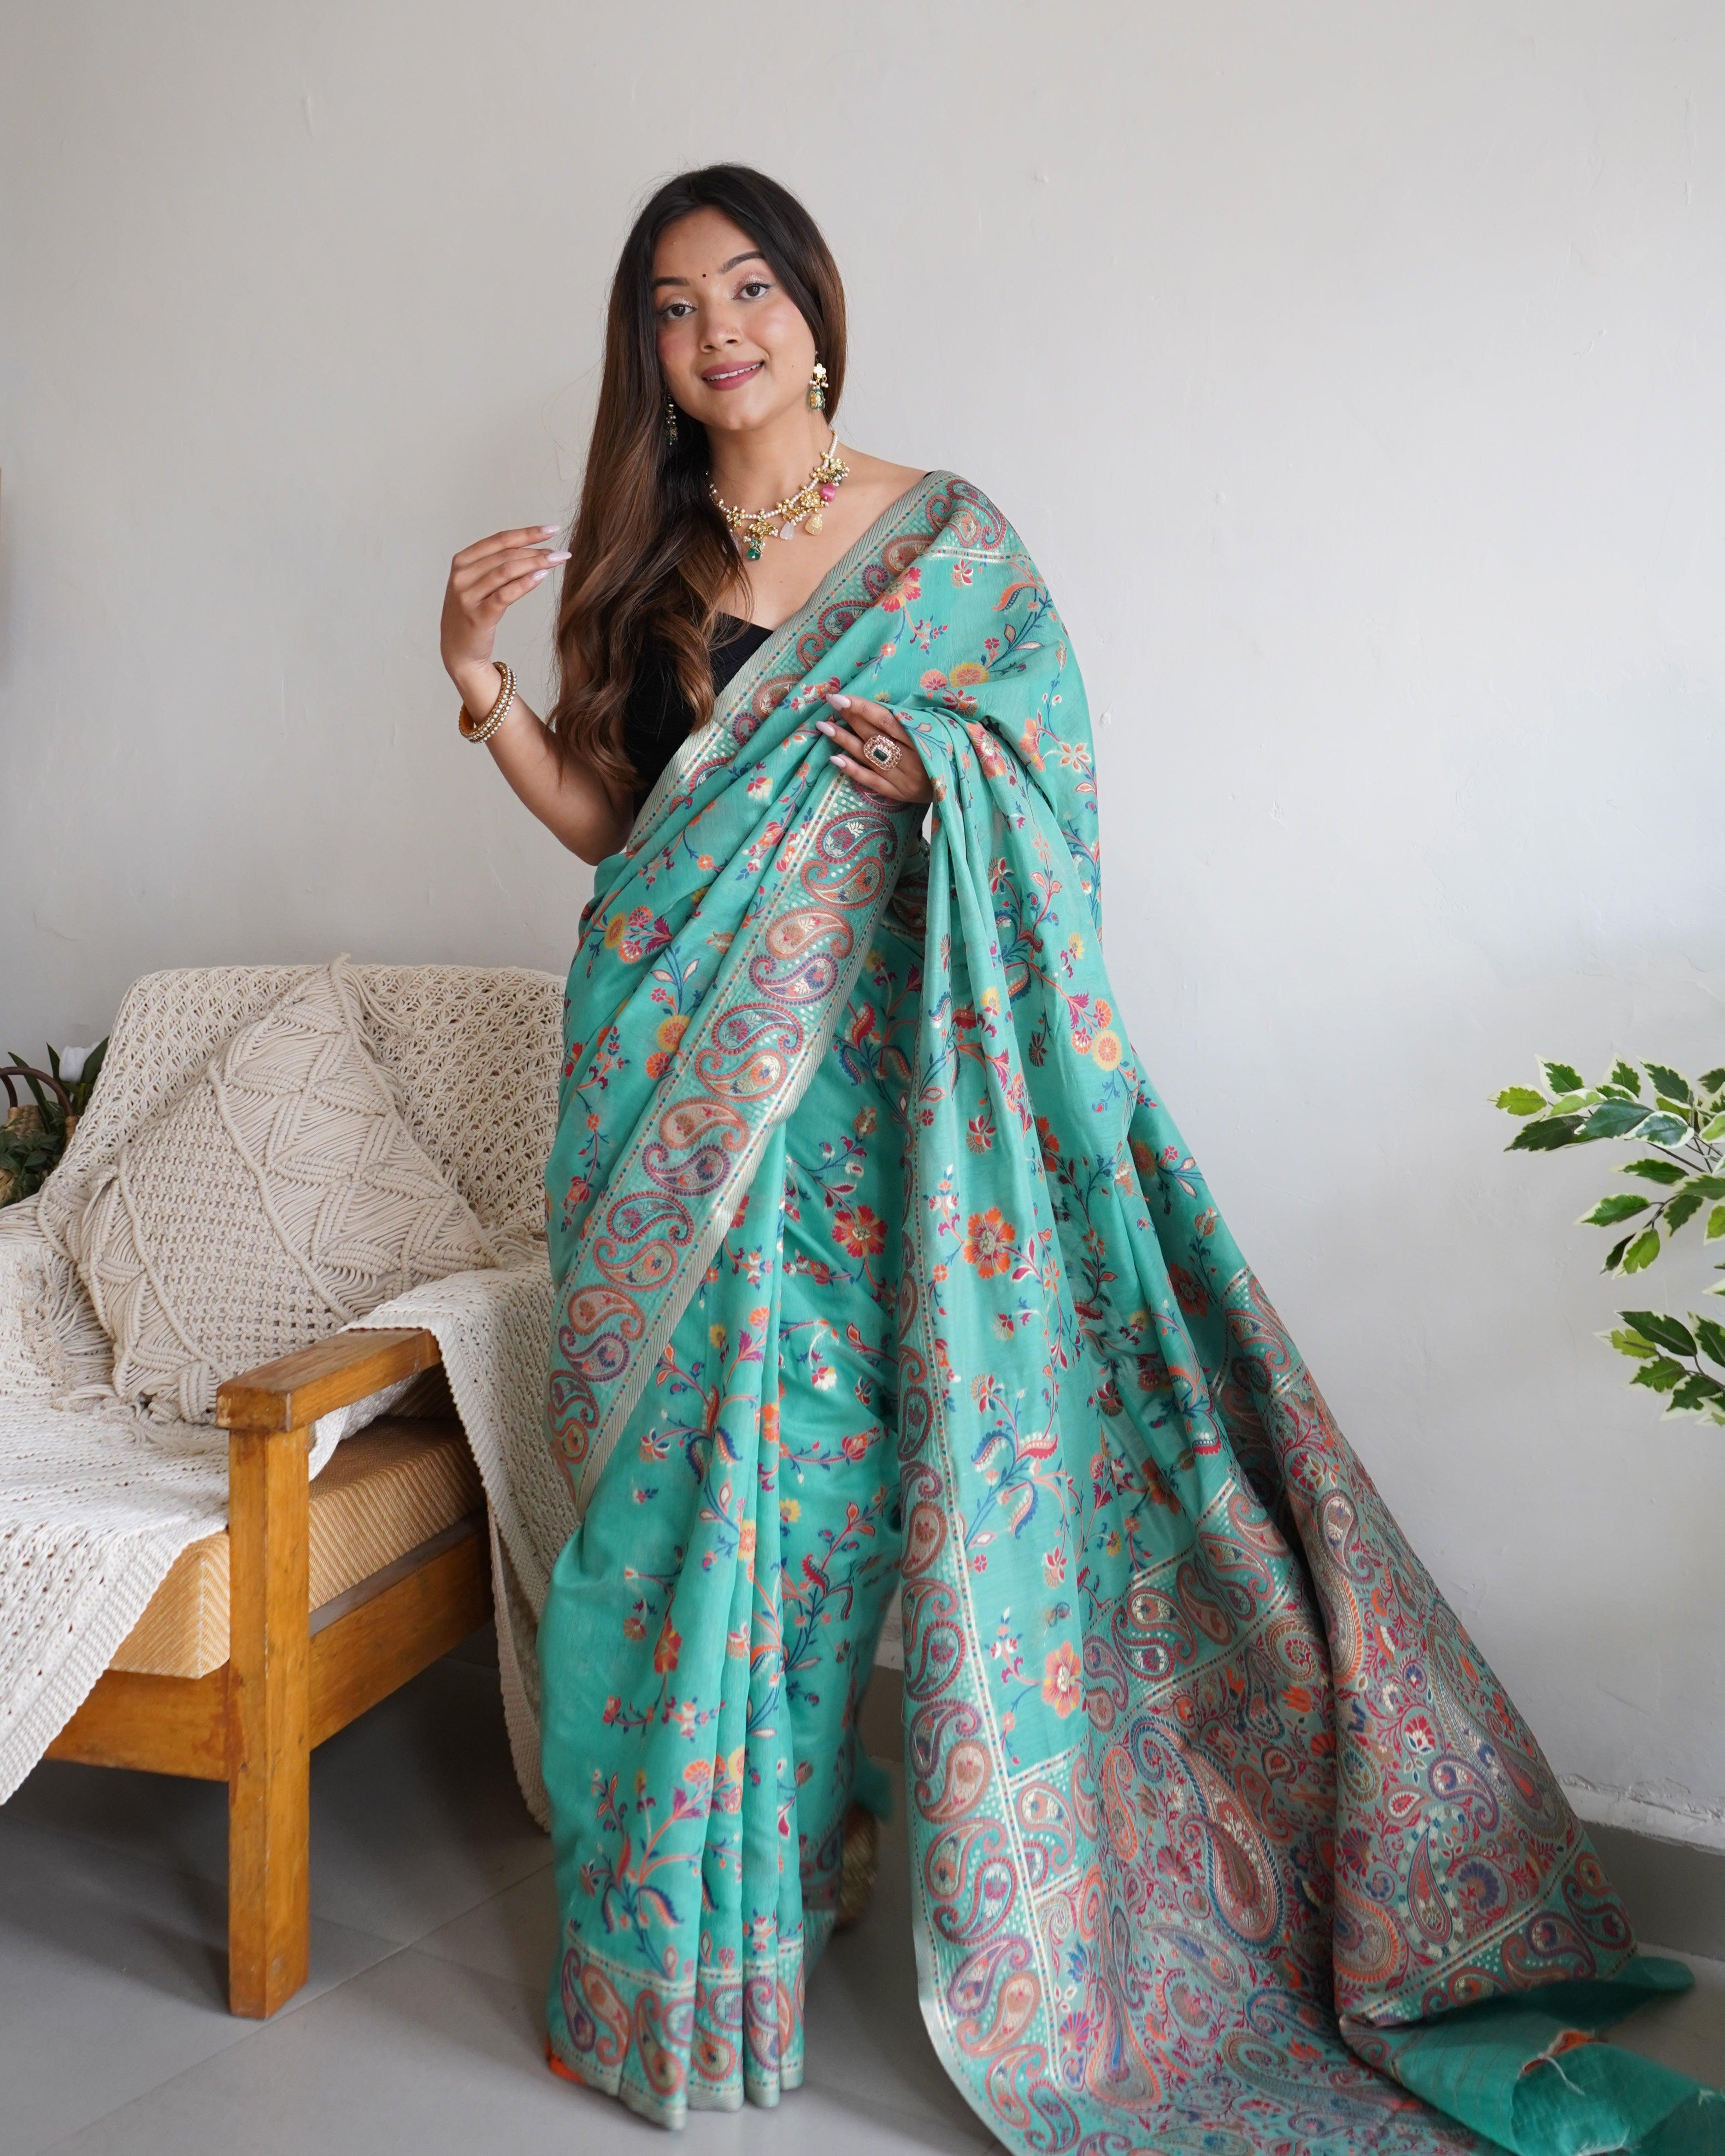 sutisancha Multi-Color Kashmiri Weaving Soft Modal Silk Saree - Suti Sancha